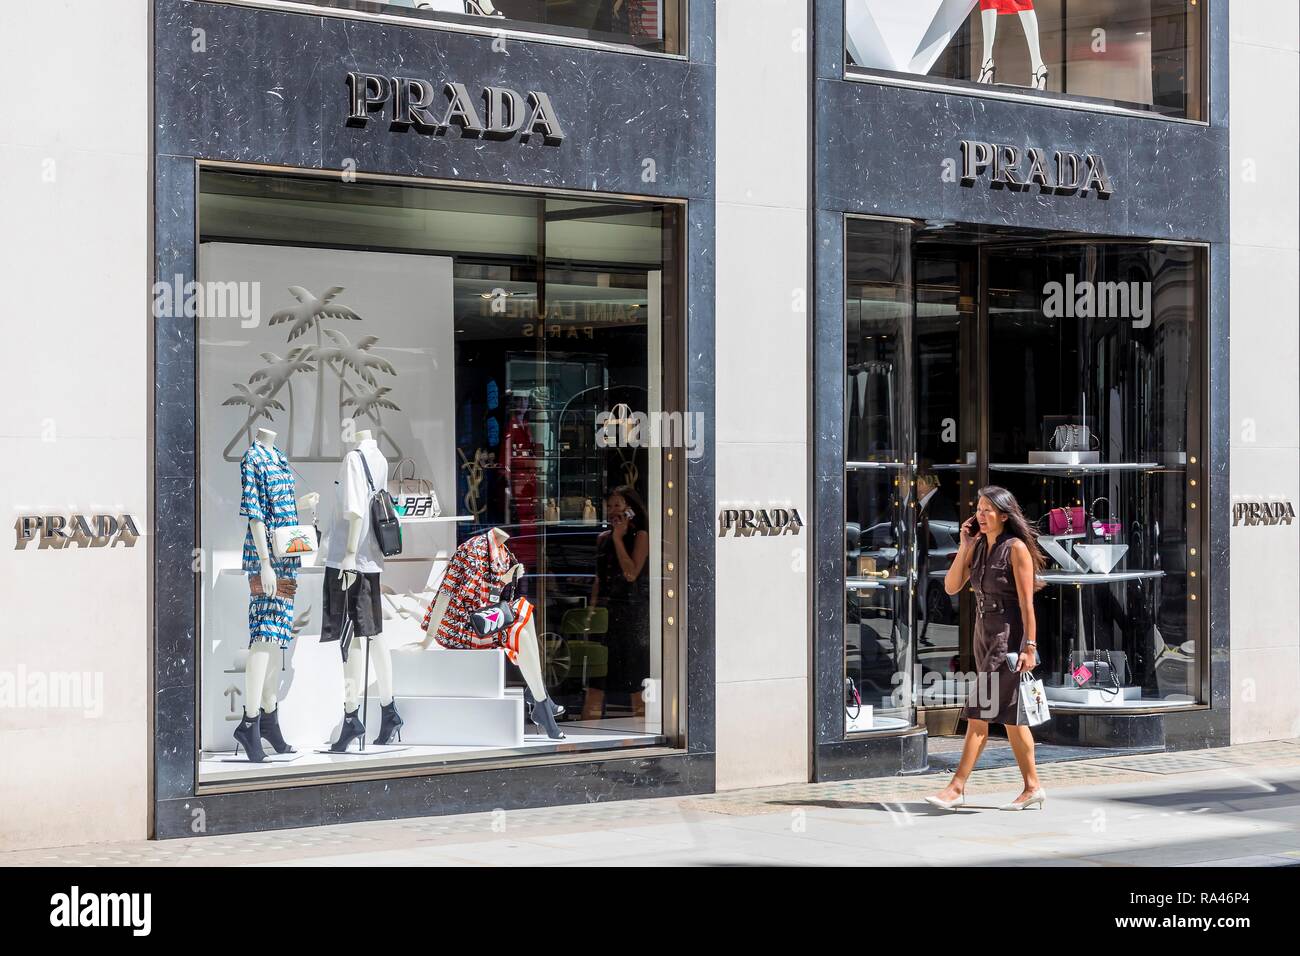 Fashion store Prada, London, Great Britain Stock Photo